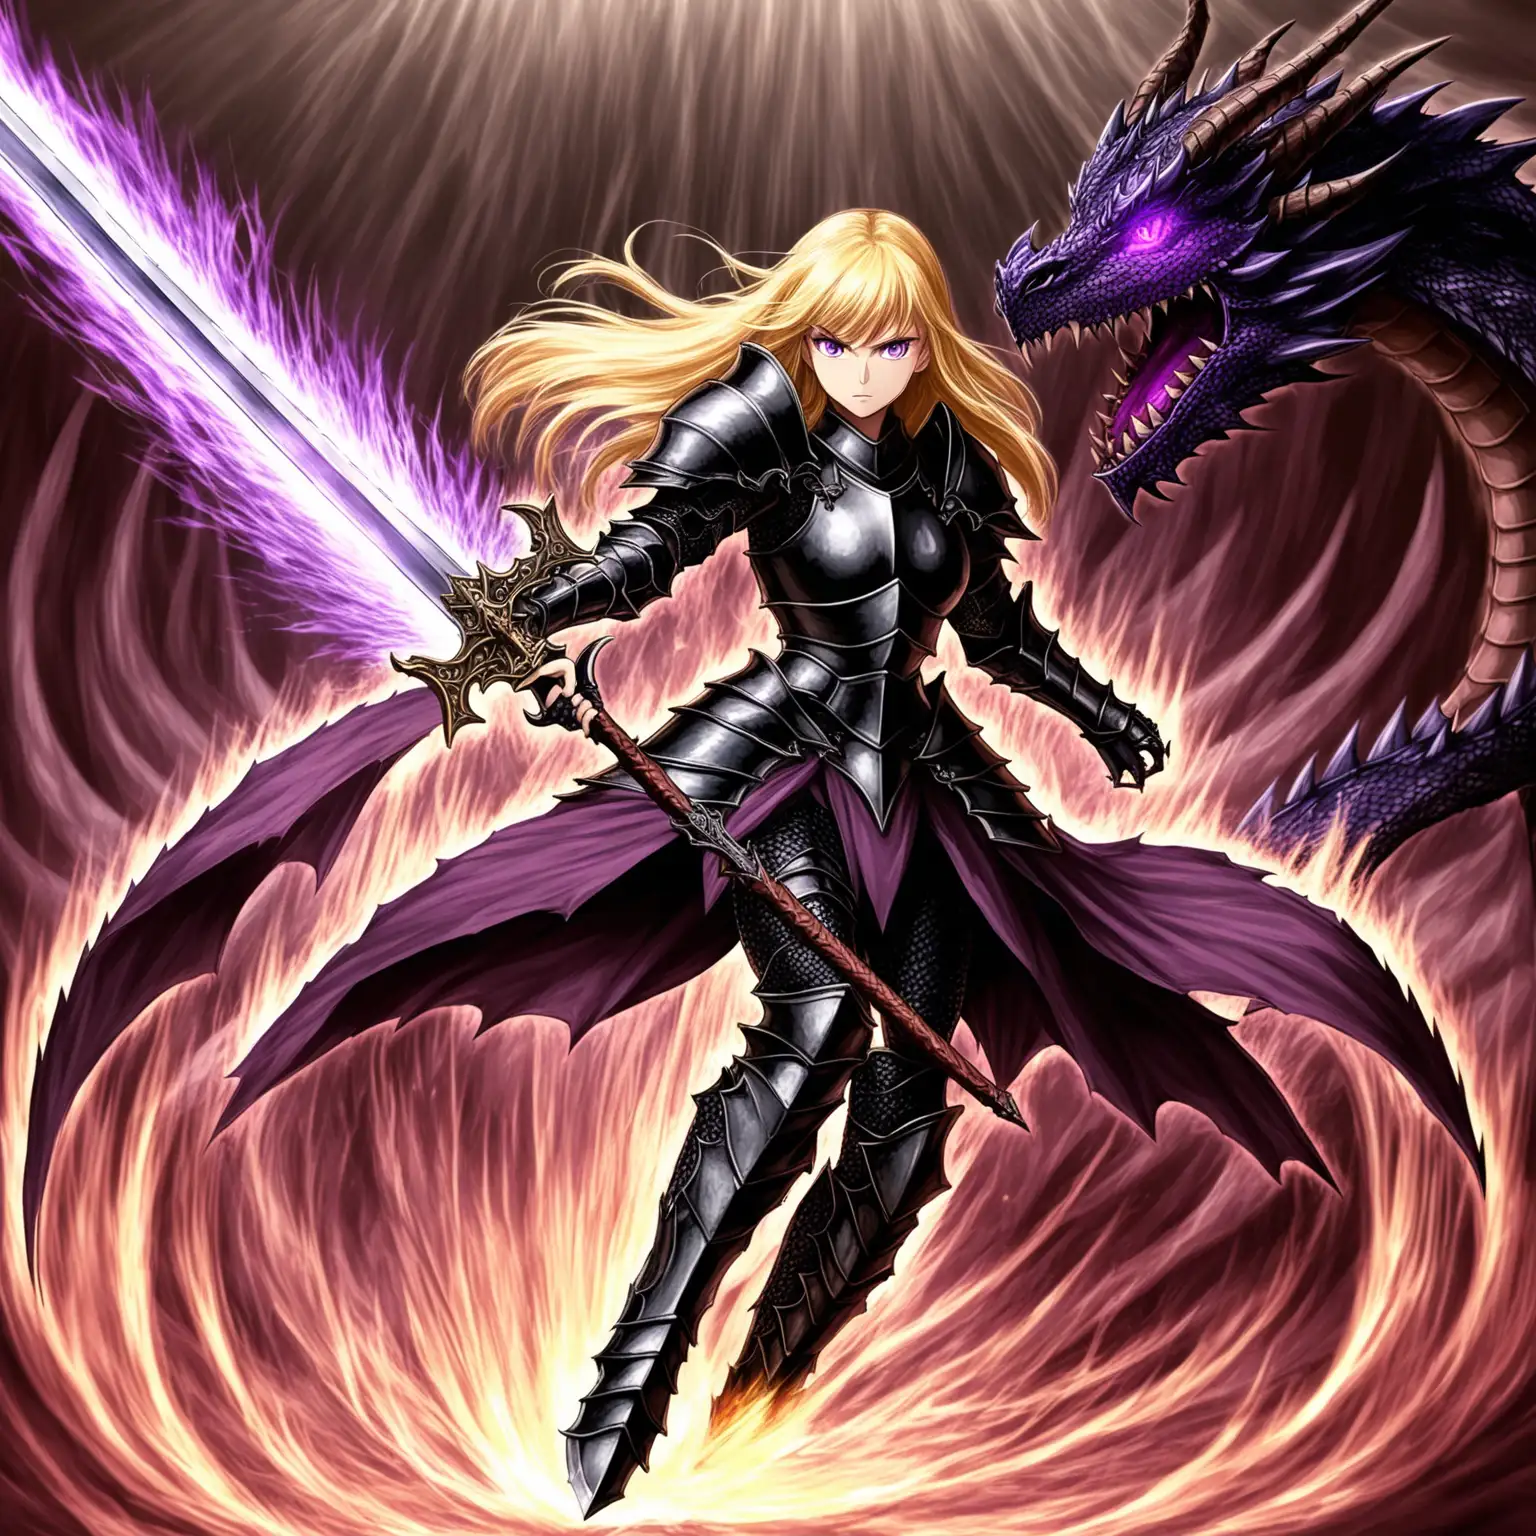 Blonde Female Dragon Slayer in Black Full Plate Armor Swinging Sword with Aura